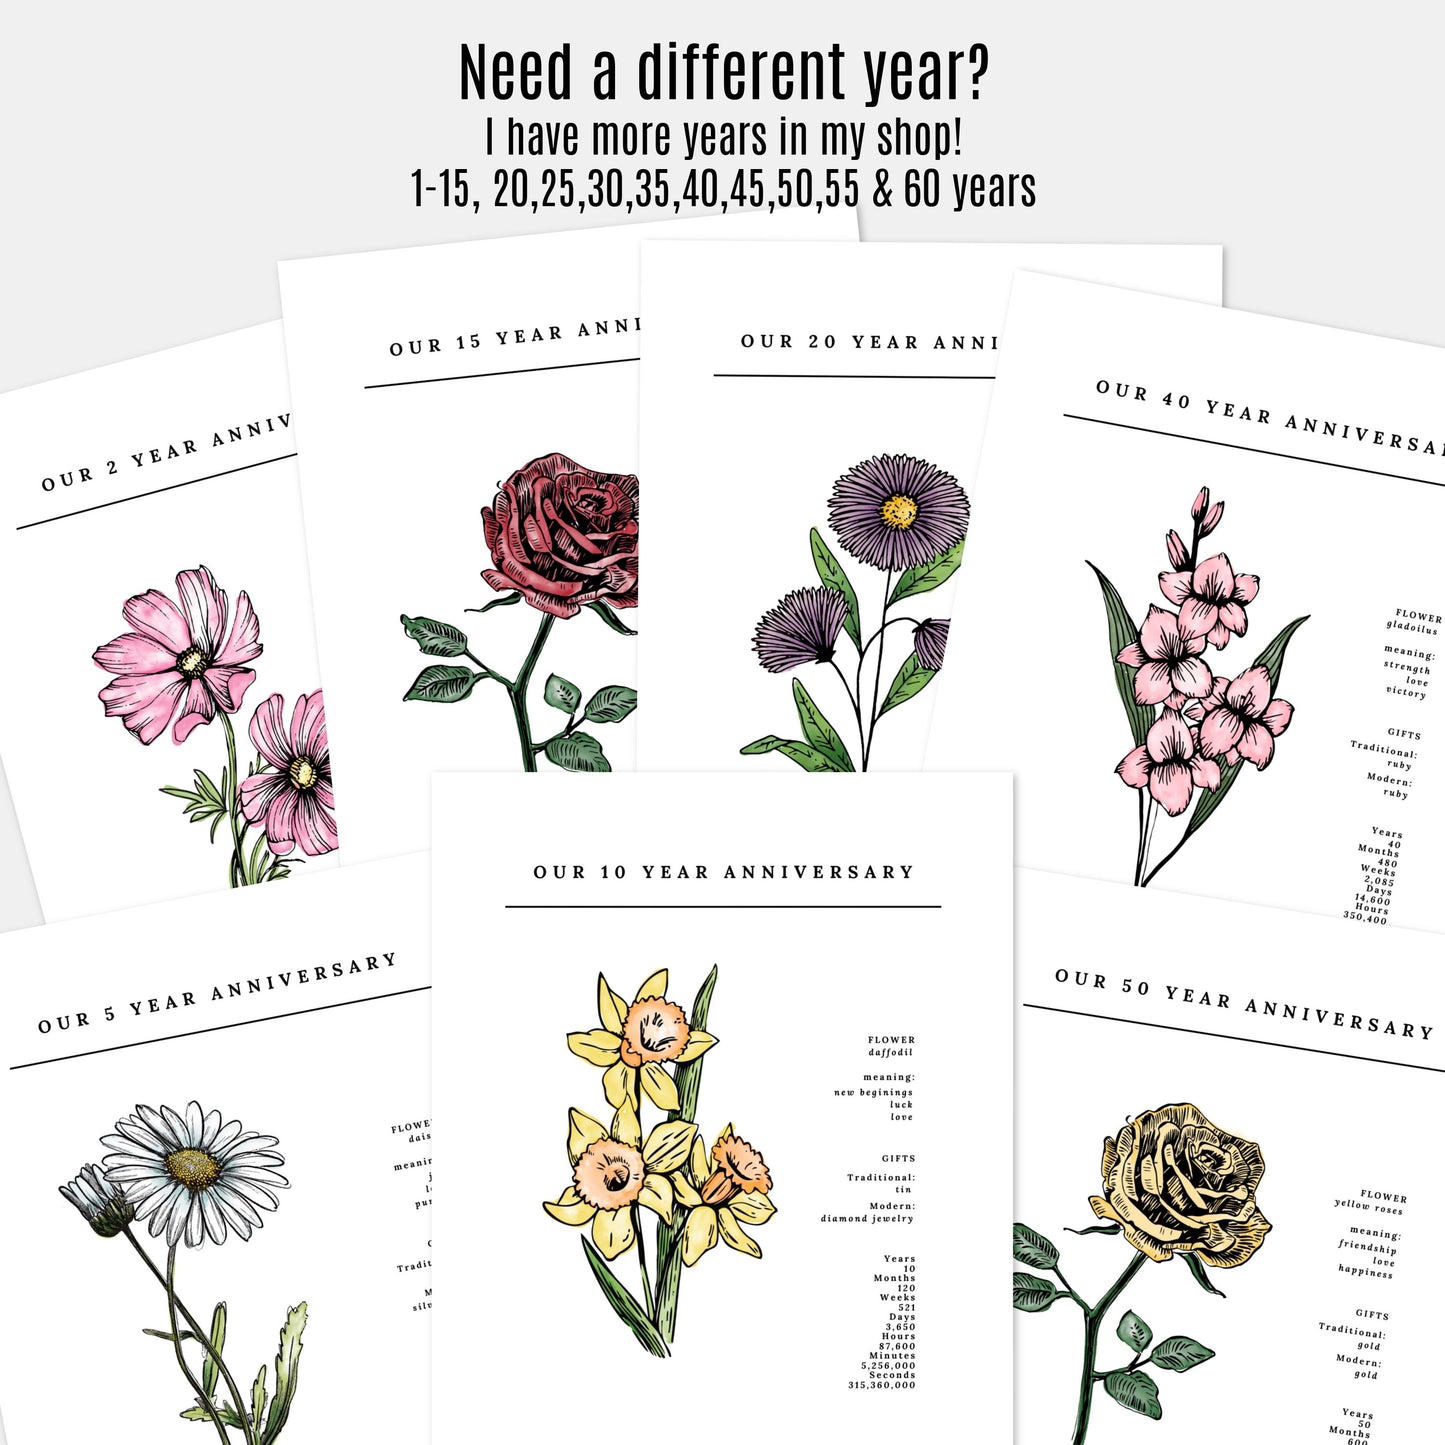 5 Year Anniversary Daisy Flower Art Printable | Wedding Anniversary Floral Gift